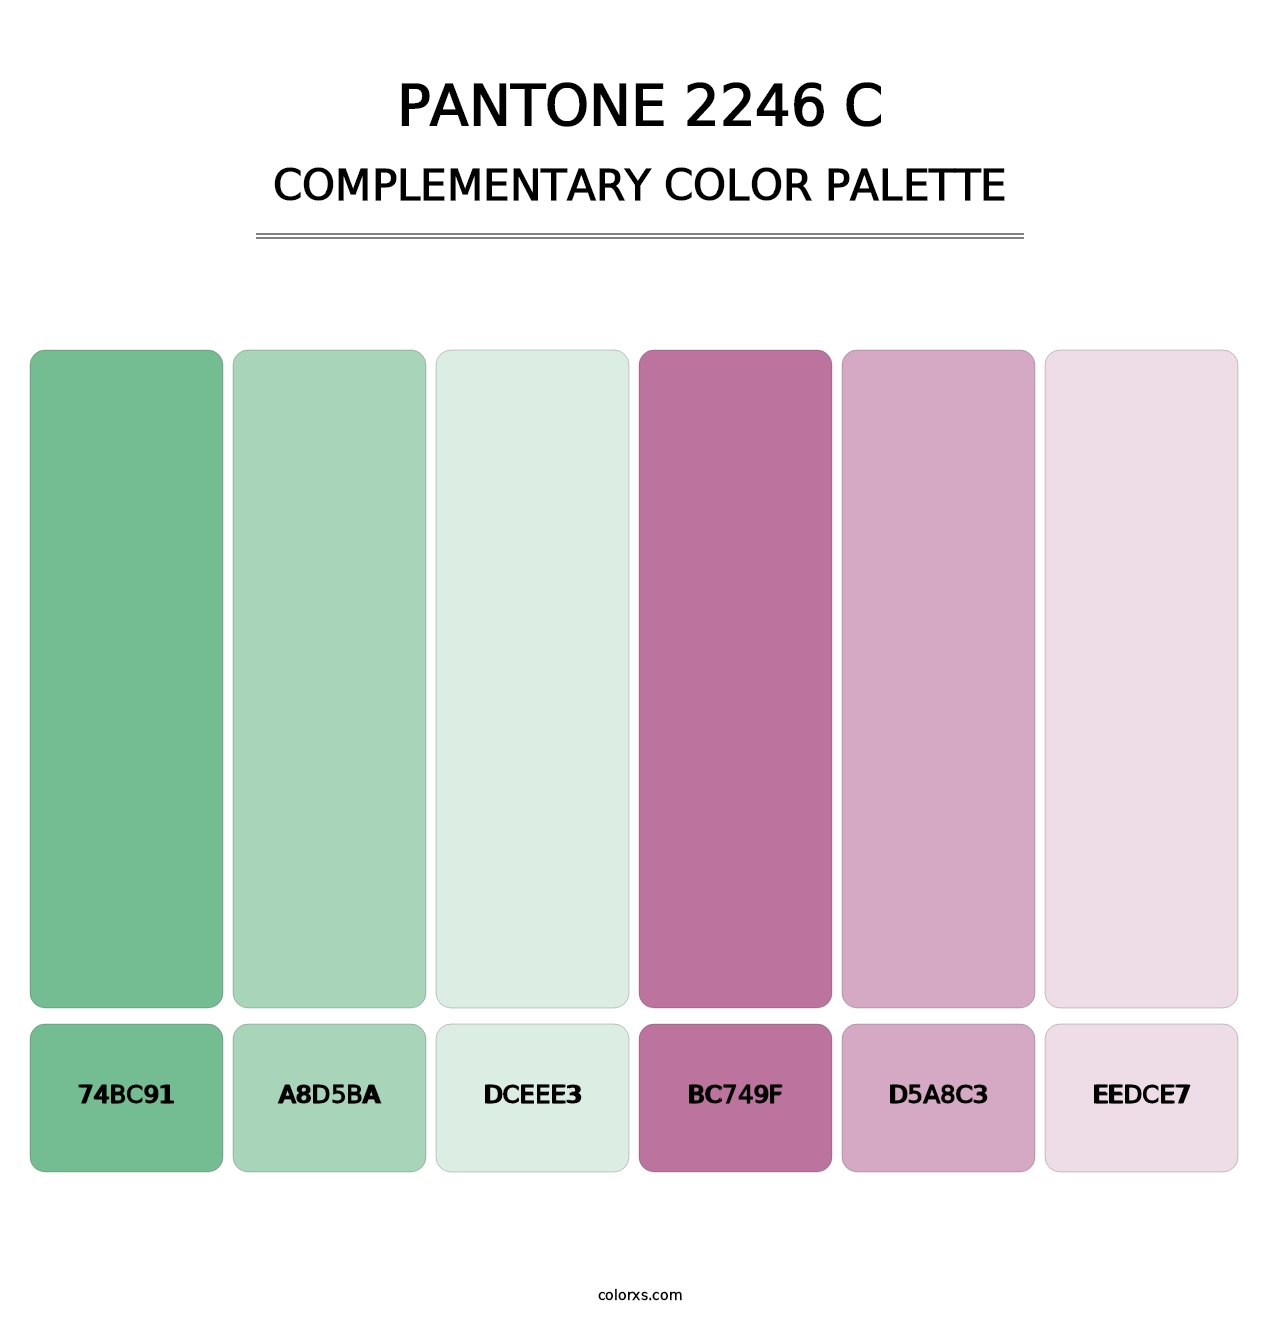 PANTONE 2246 C - Complementary Color Palette